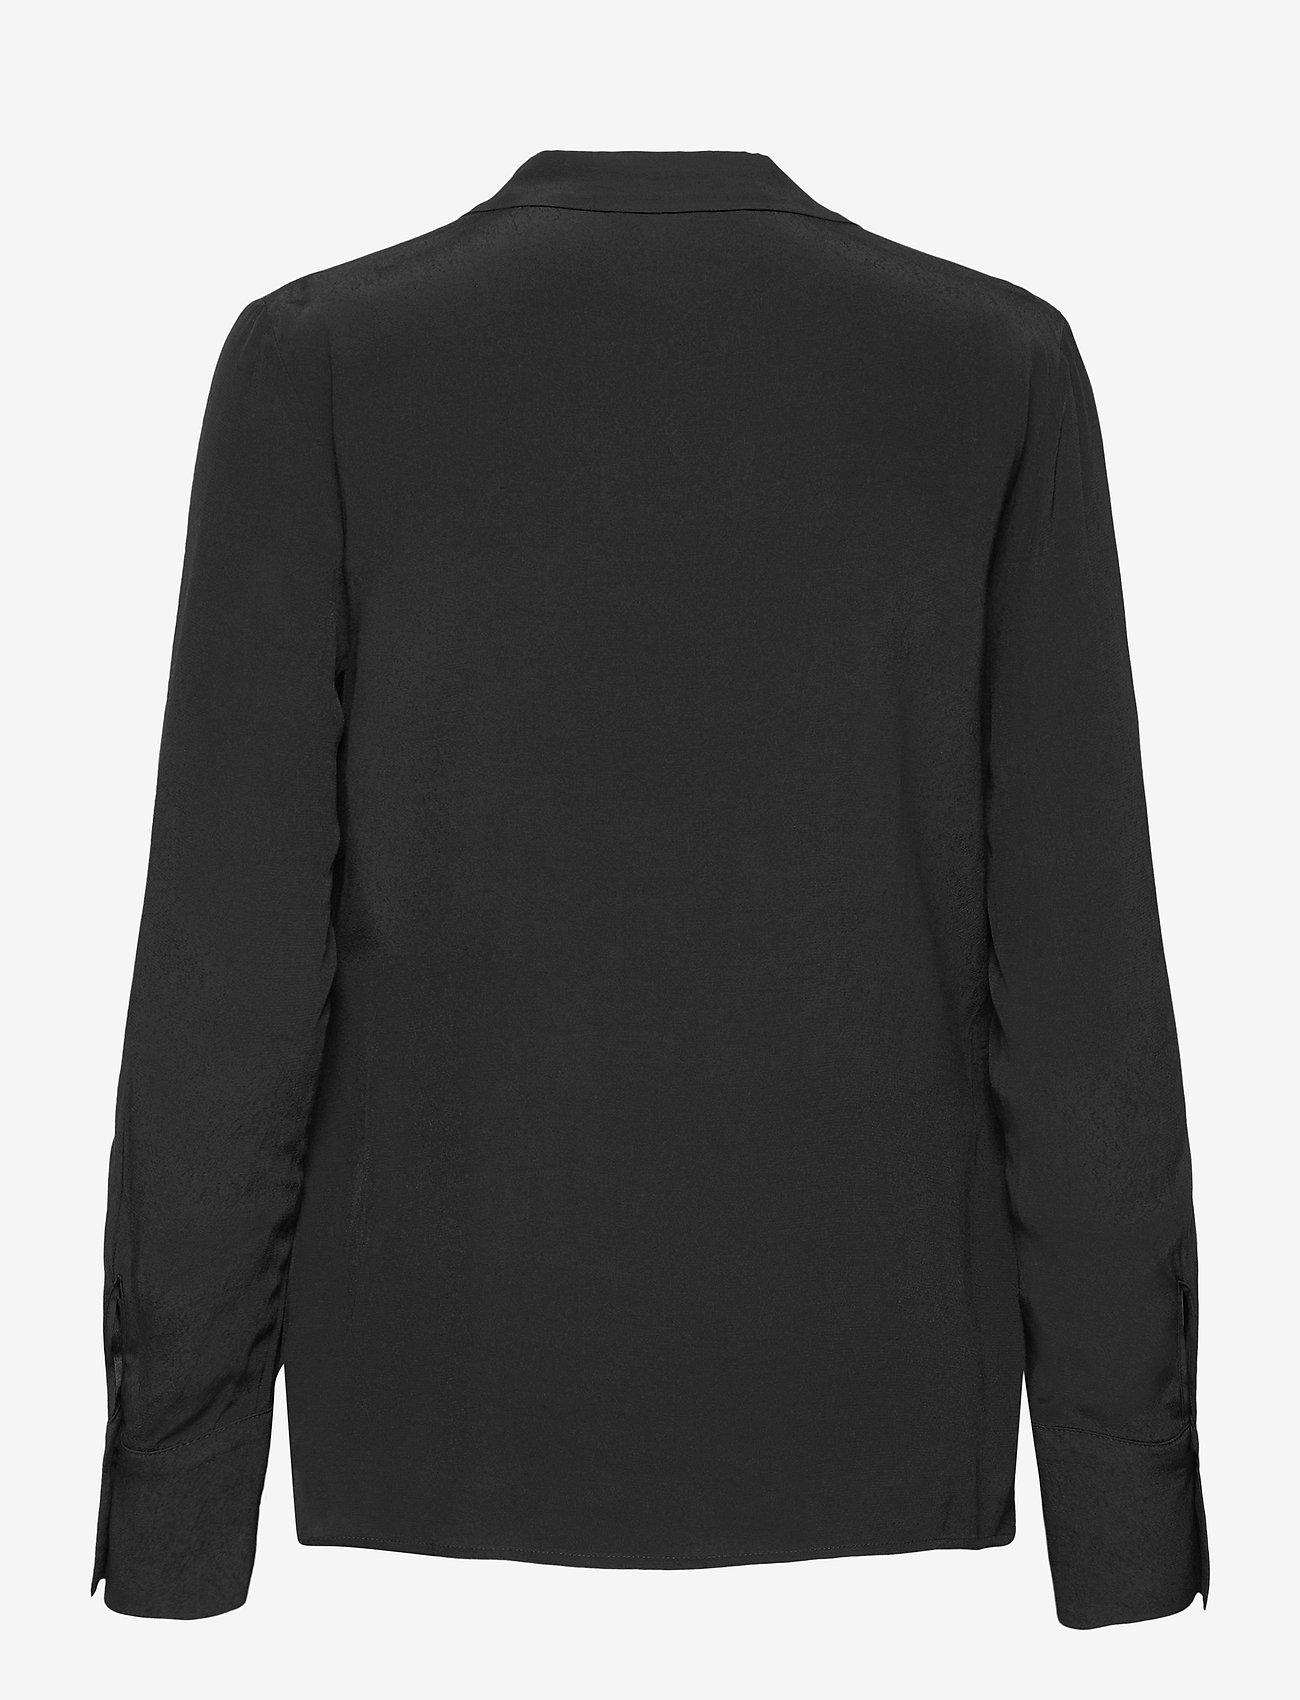 Esprit Collection - Women Blouses woven long sleeve - palaidinės ilgomis rankovėmis - black - 1